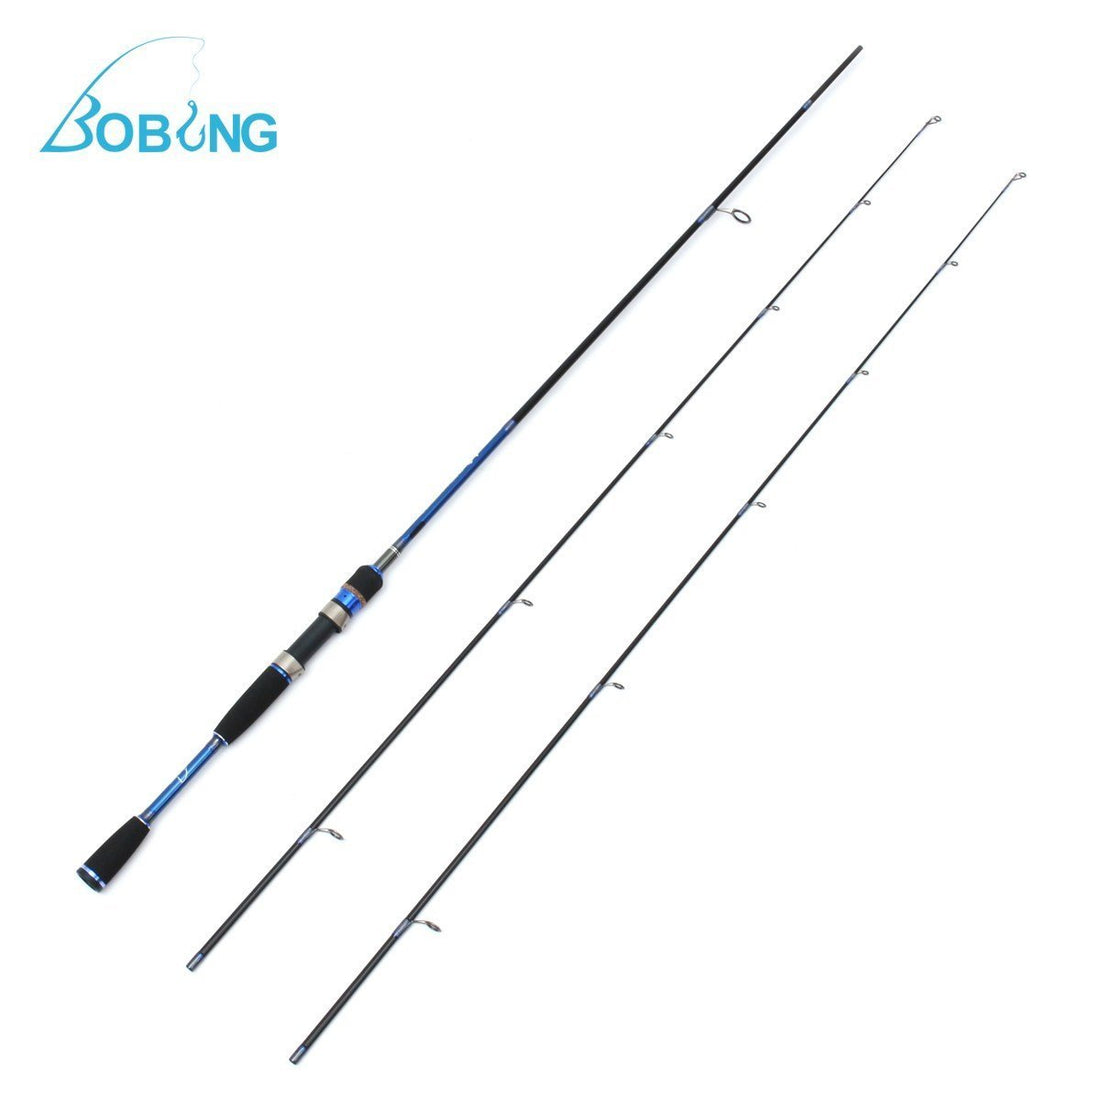 Bobing Original Lure Rod 2 Tips M Ml Power 2.1M 2 Sections Carbon Fishing Rod-Baitcasting Rods-Cycling & Fishing Store-Bargain Bait Box